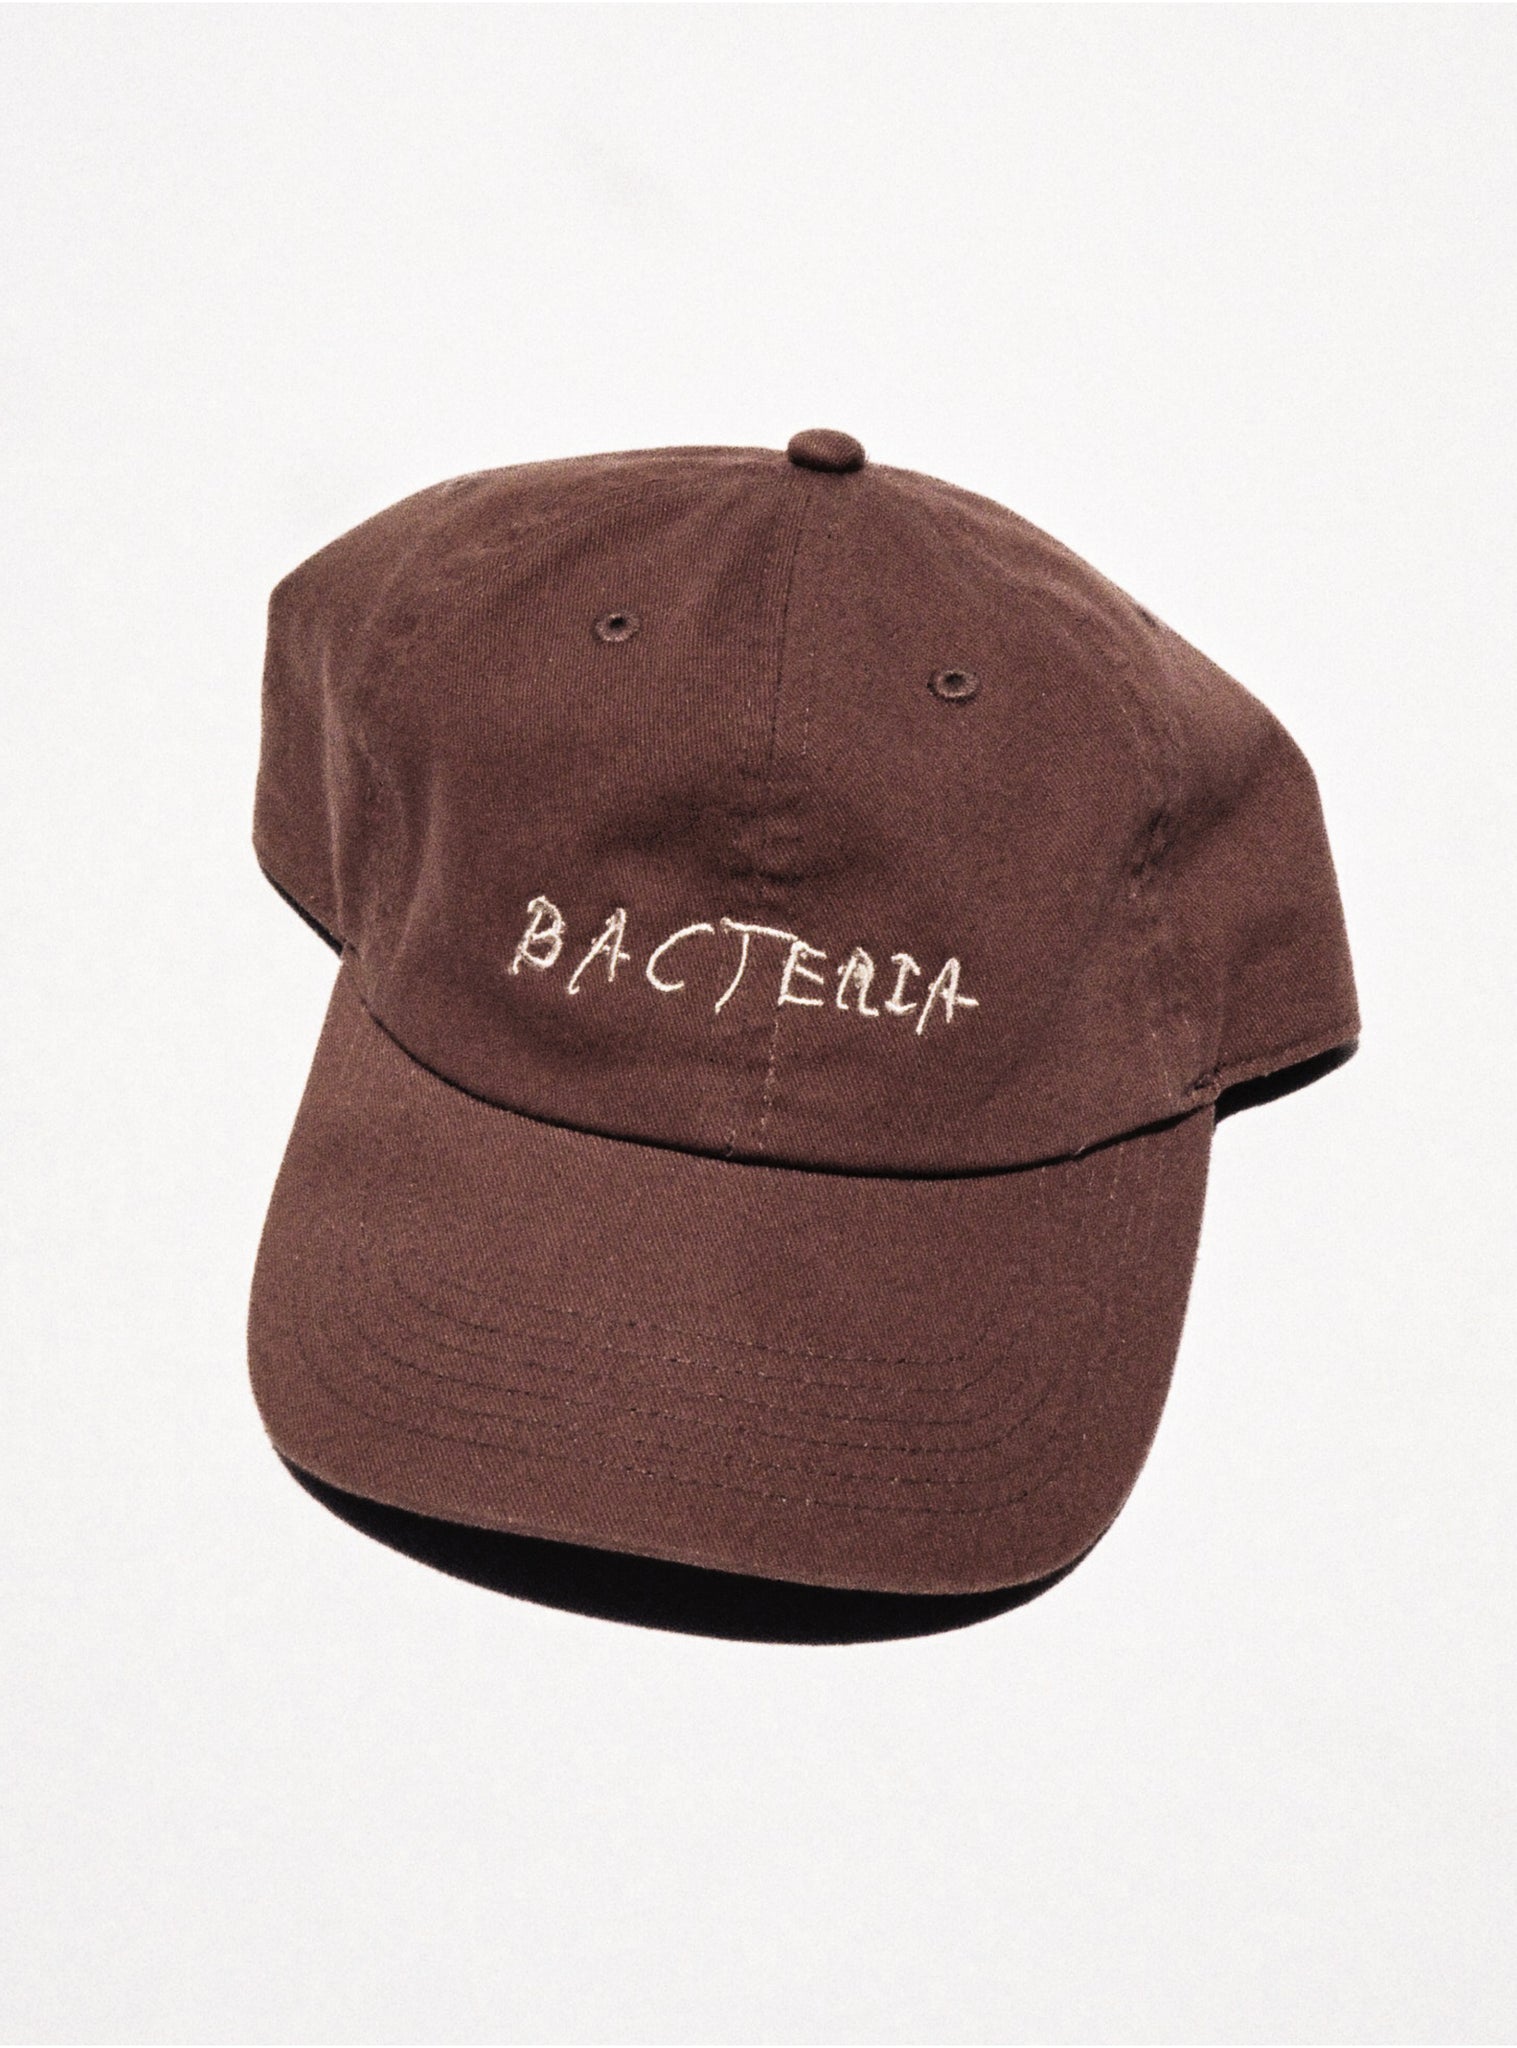 Bacteria Hat